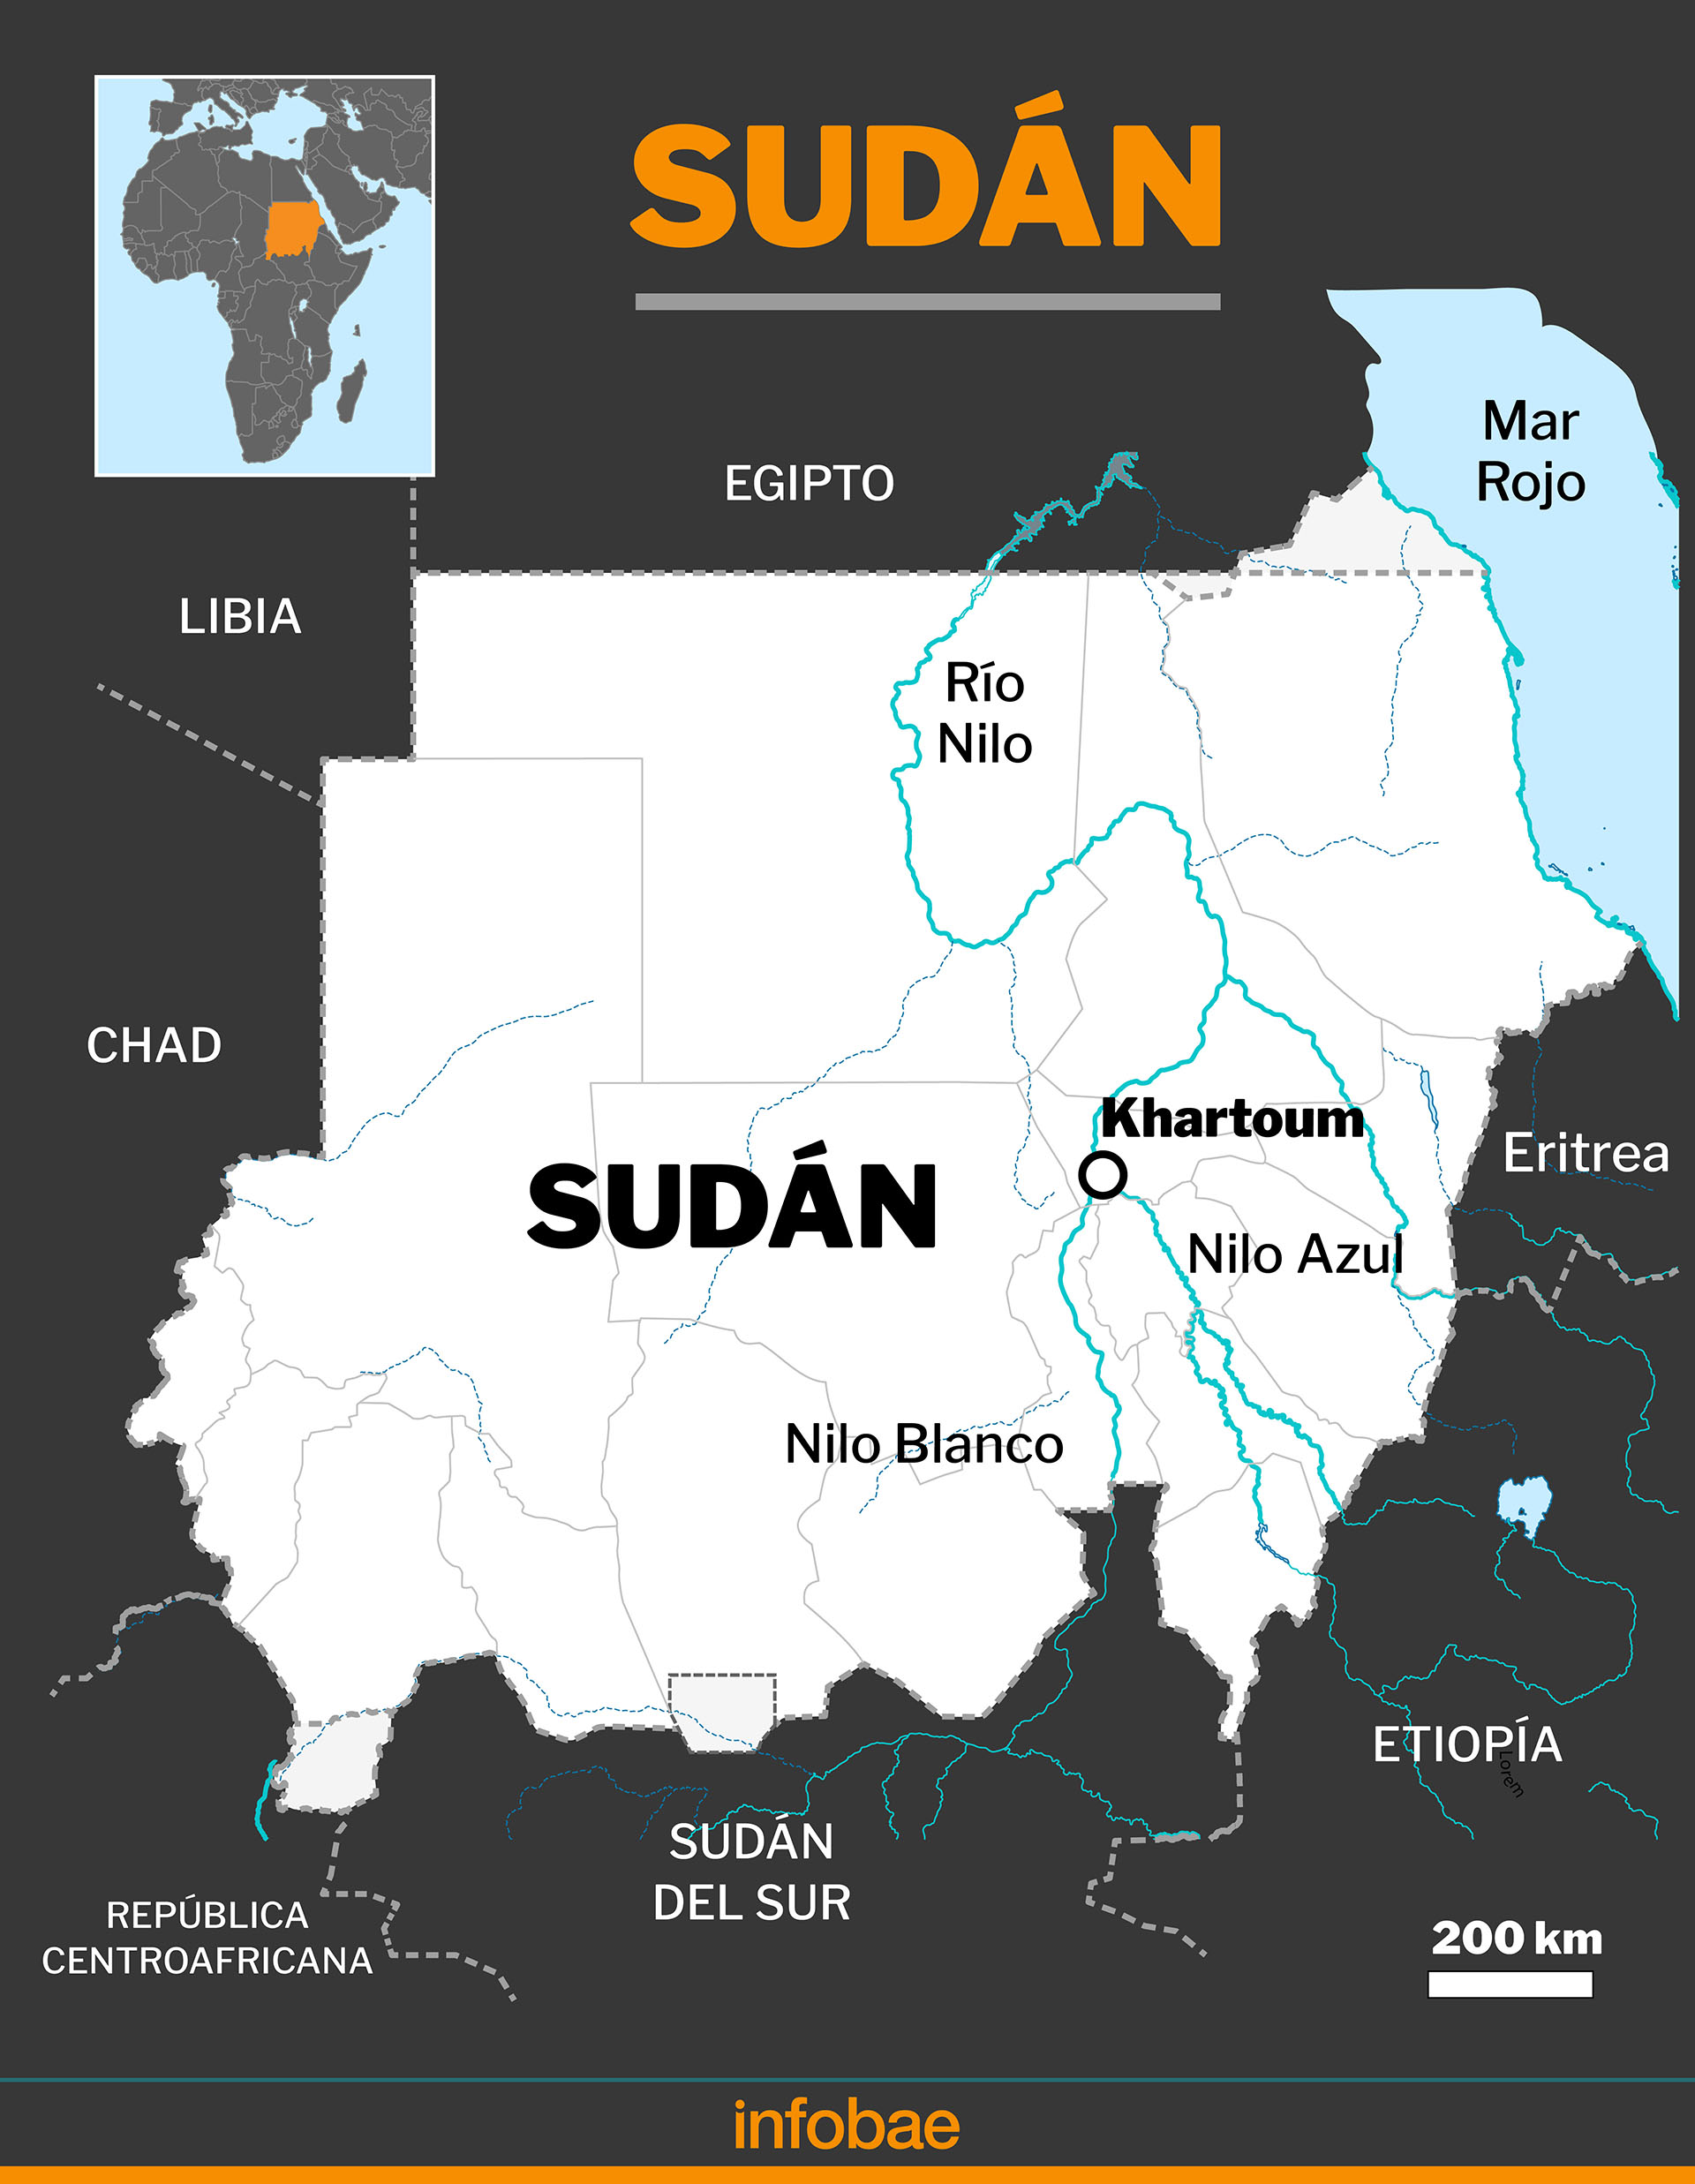 guerra - Sudán del Sur se encamina hacia la guerra civil - Página 3 4XQRA4PWSFANFPZR6GKXM2WNFU